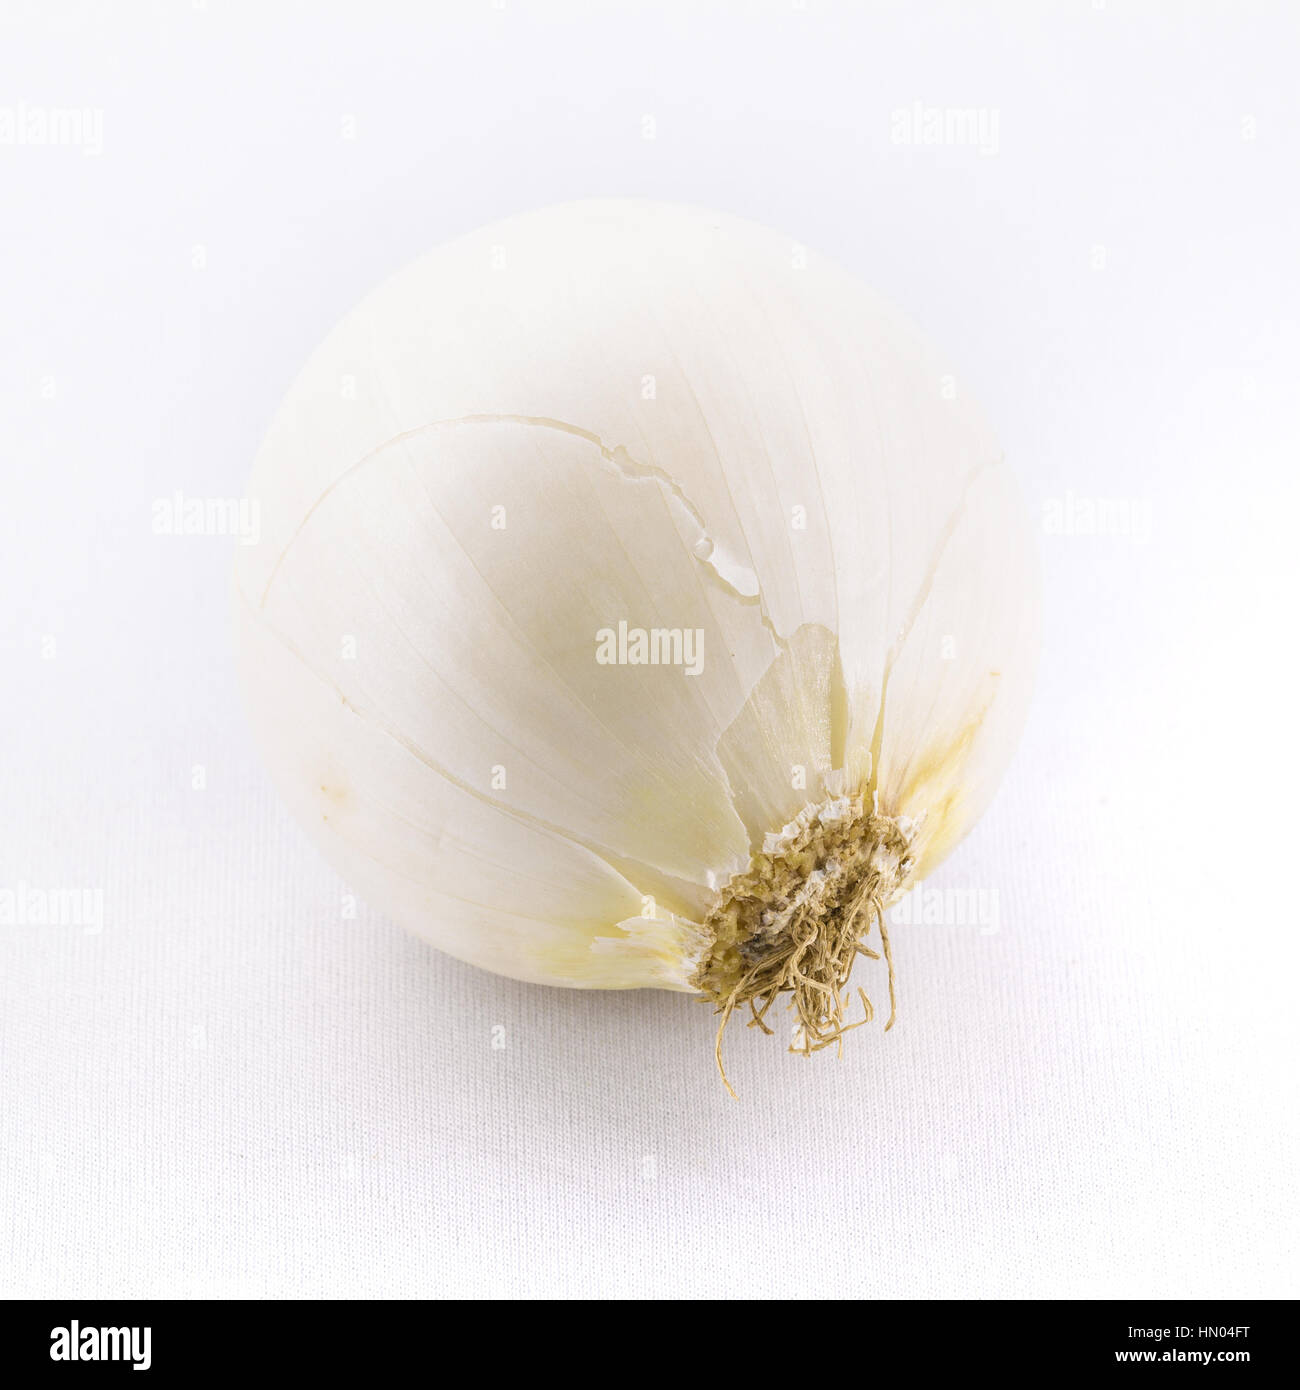 onion isolated on white background Stock Photo